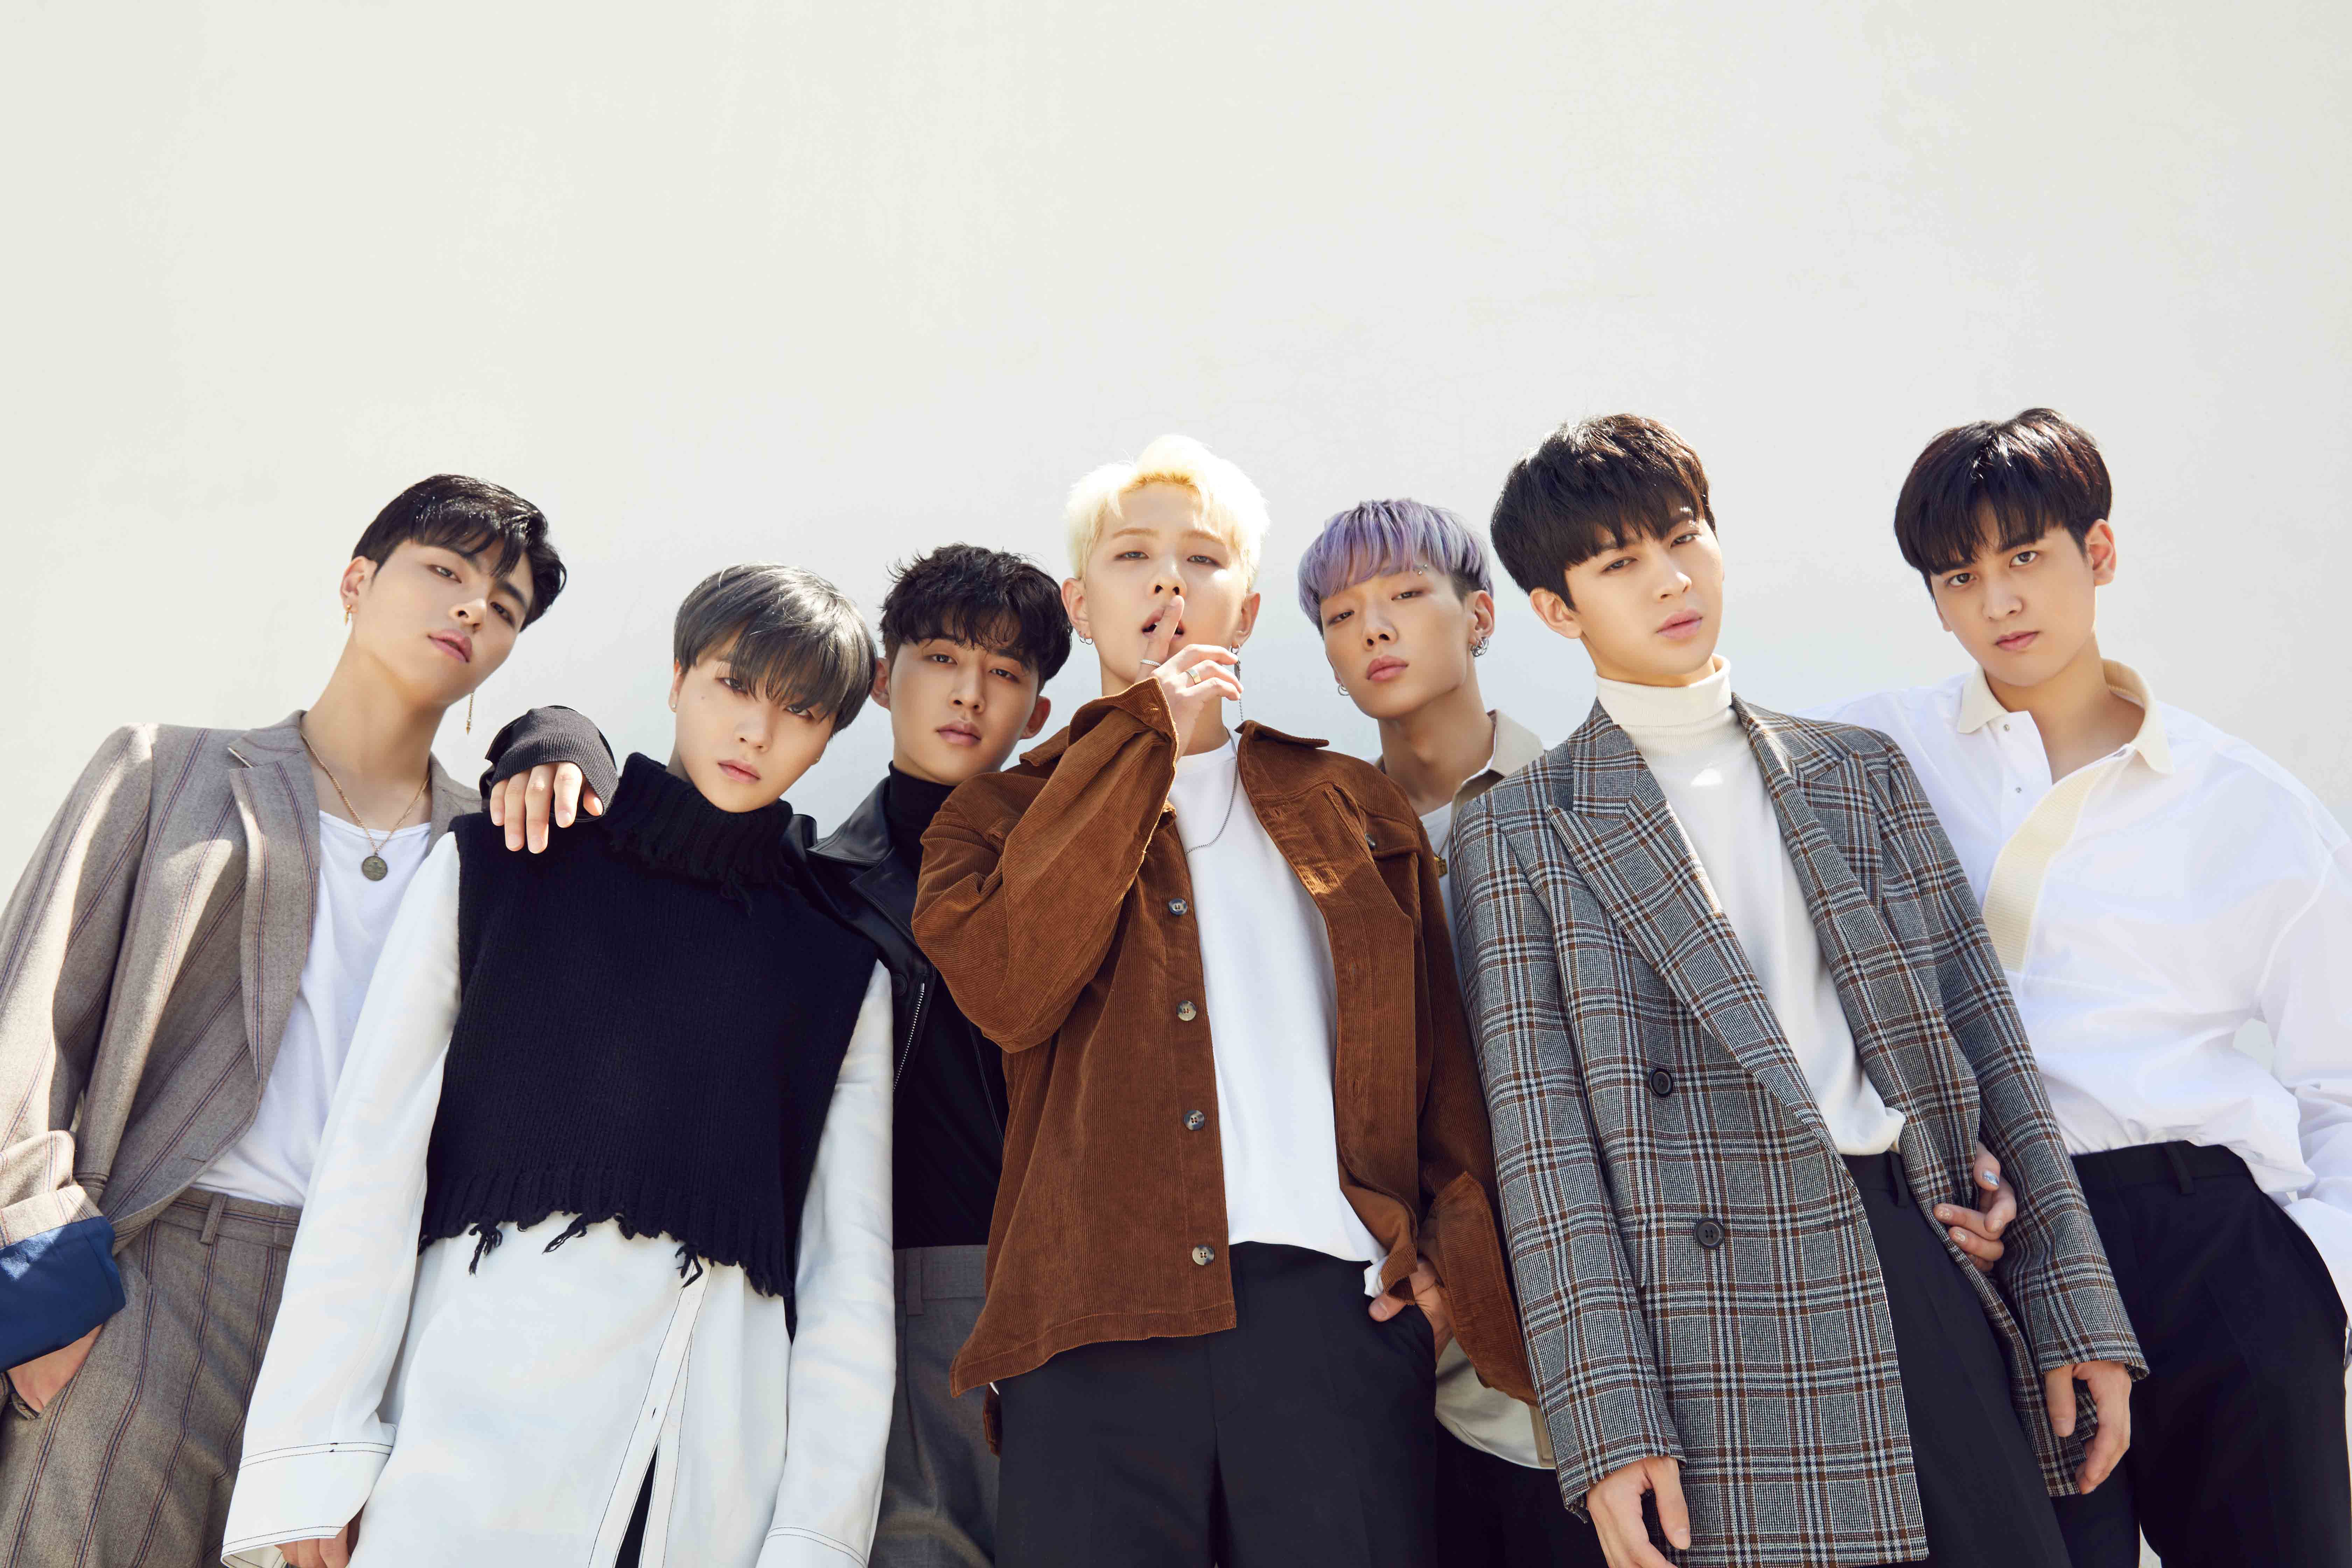 BIGBANGの系譜を継ぐ7人組ボーイズグループiKON(アイコン)、 2019年2月27日(水)に”NEW KIDS”プロジェクトの集大成となるアルバム『NEW KIDS』発売決定！